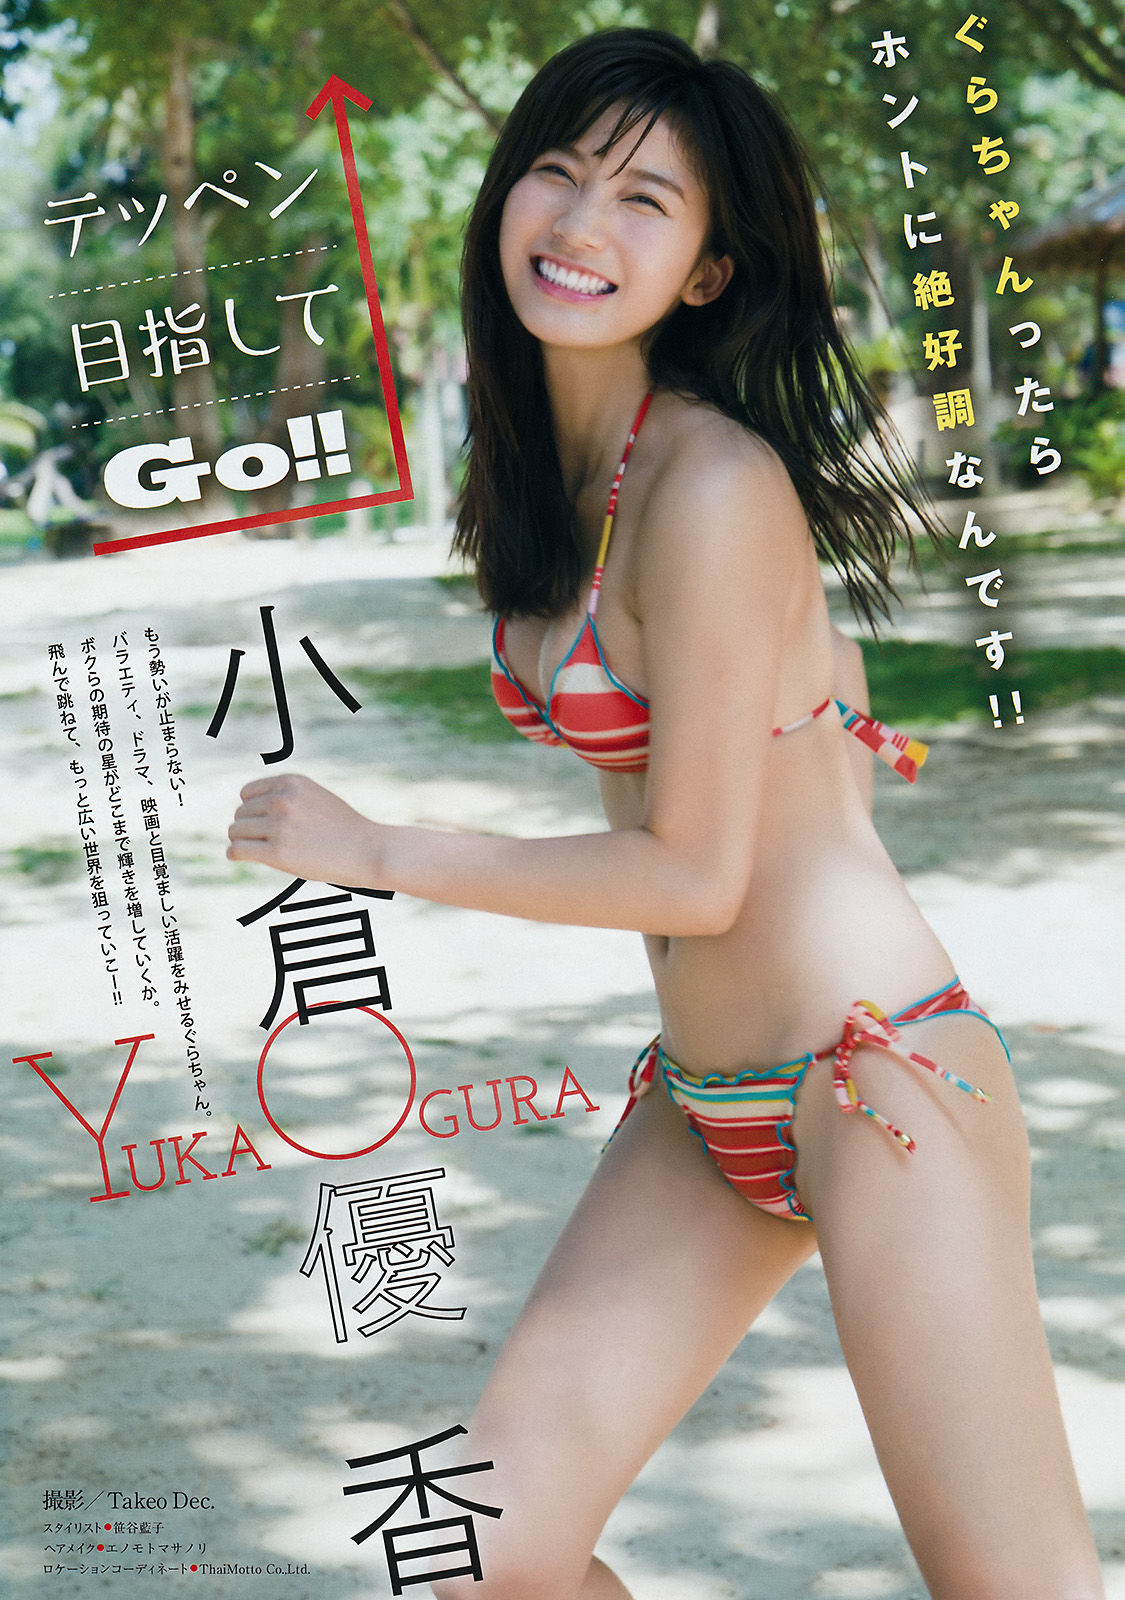 [Young Magazine]美胸日本嫩模:小仓优香高品质壁纸图片珍藏版(12P)